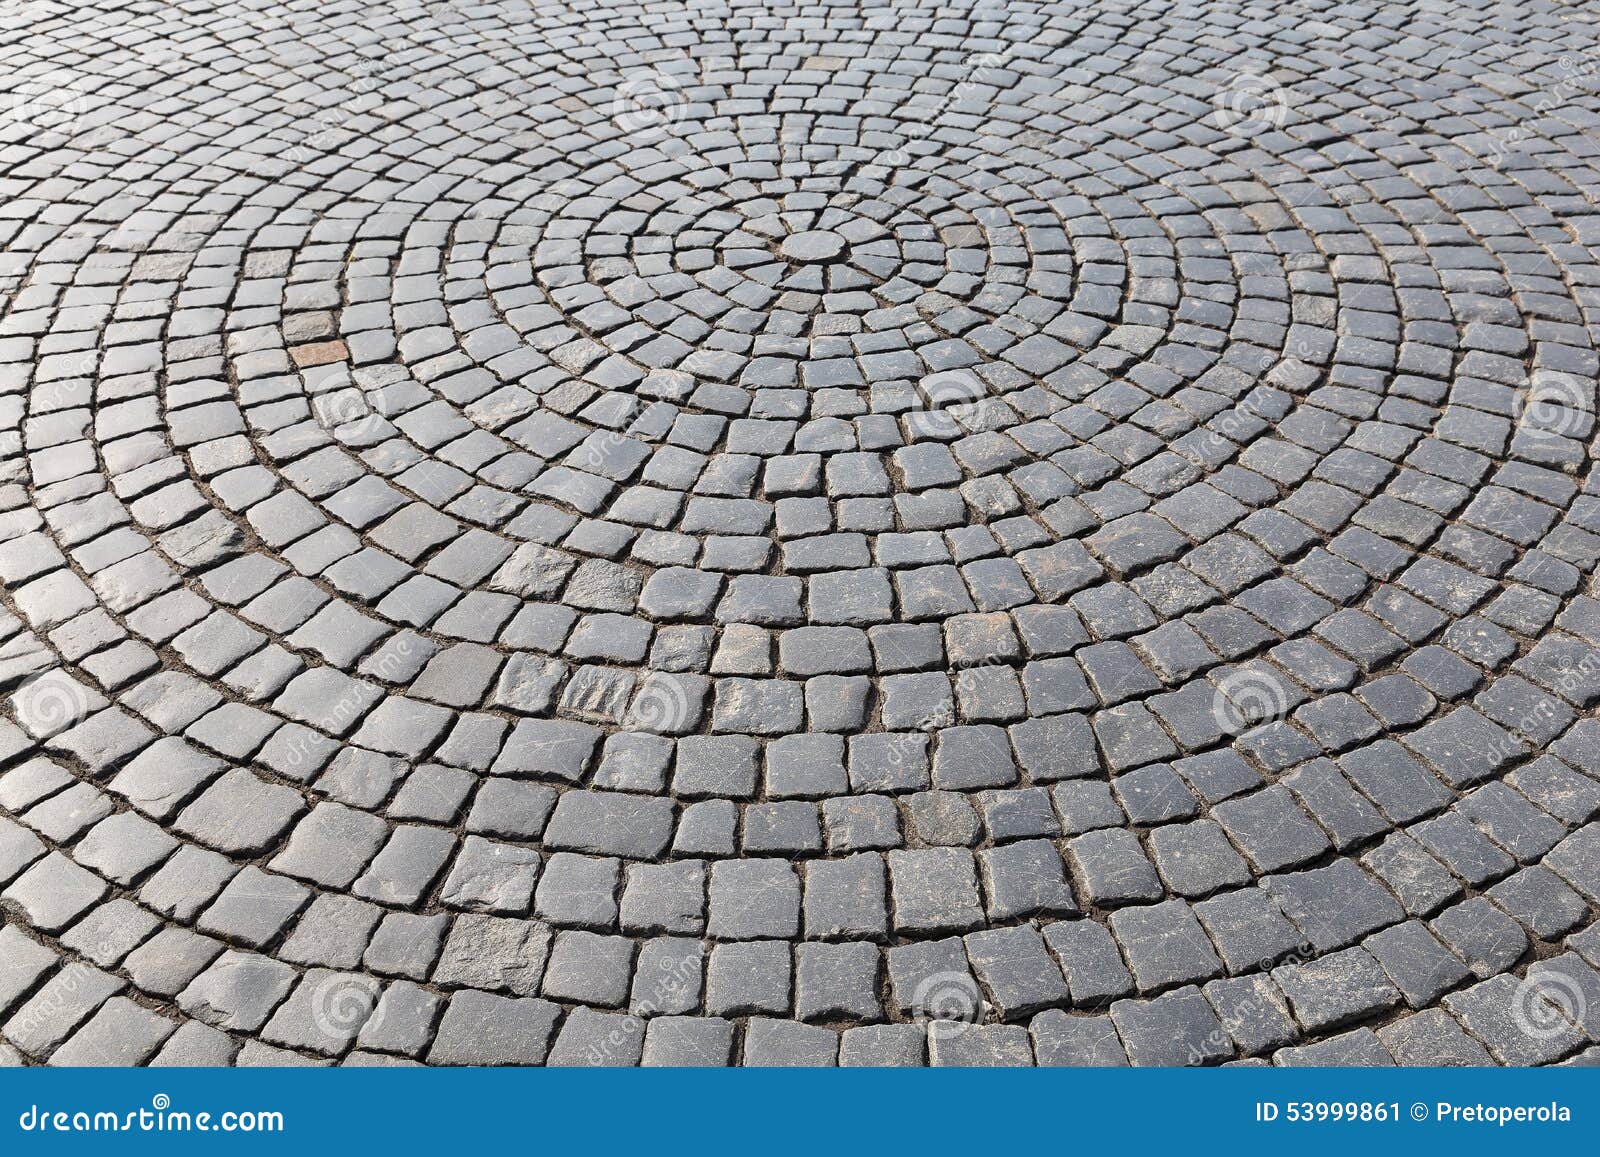 stone street road pavement texture